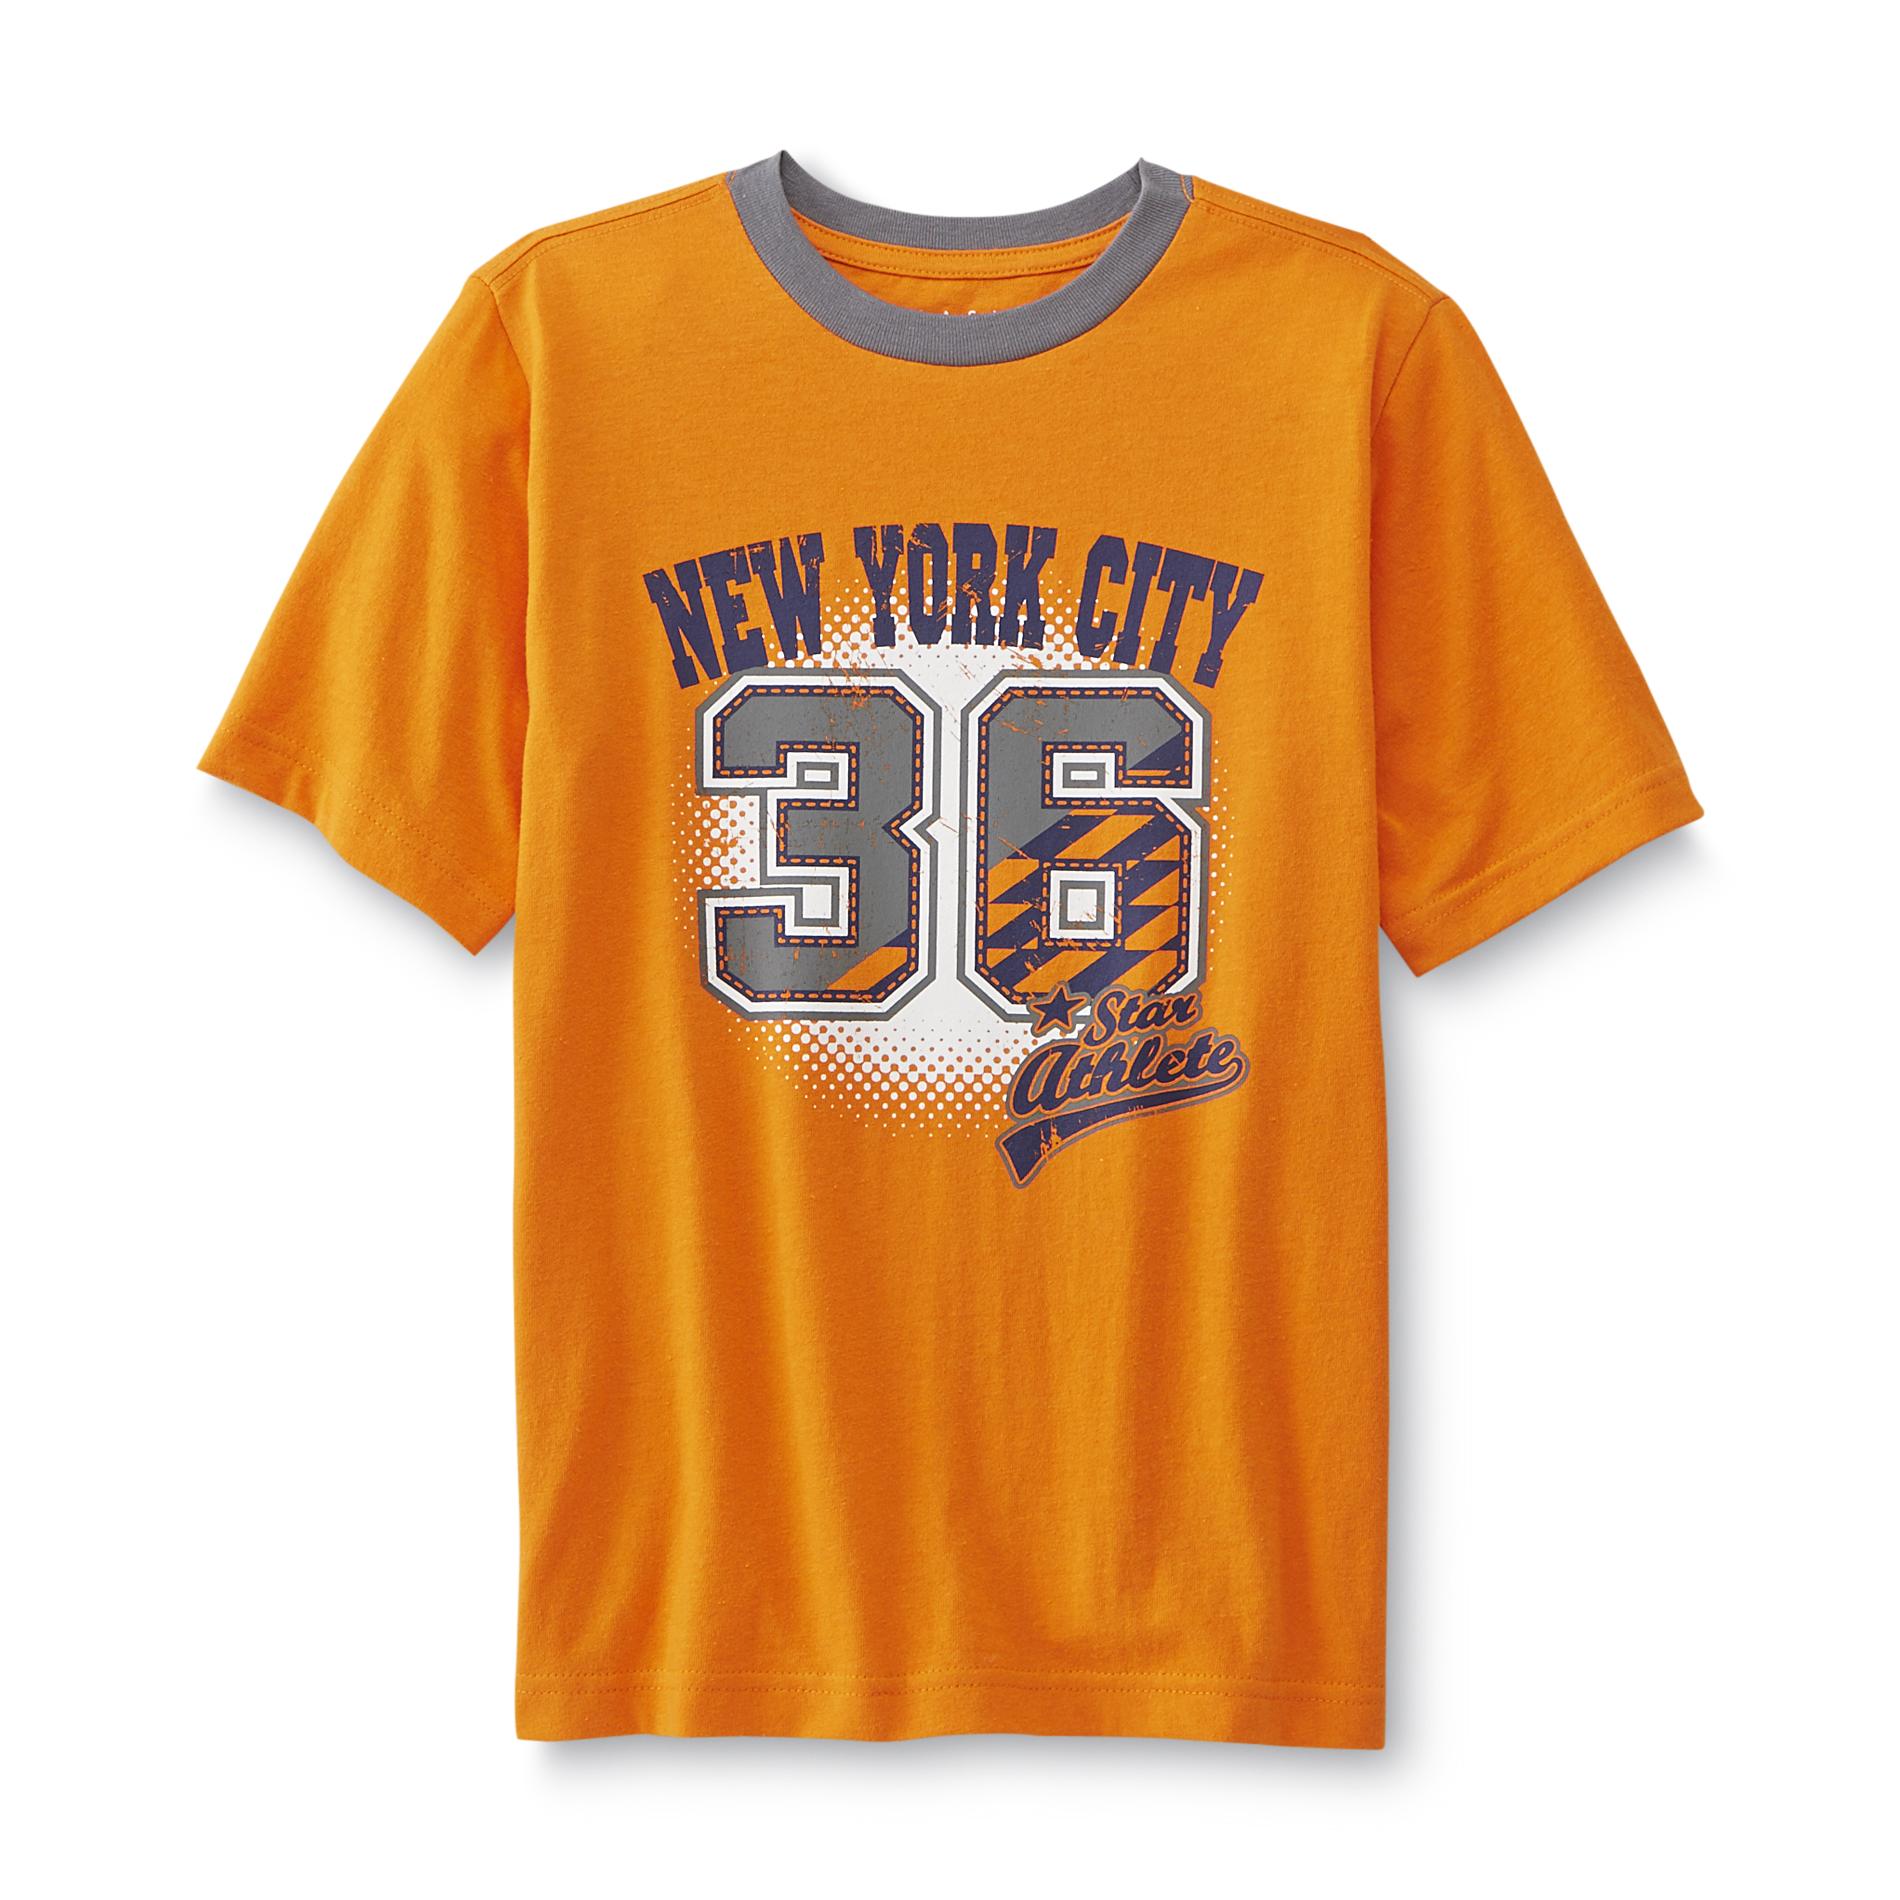 Basic Editions Boy's Graphic T-Shirt - New York